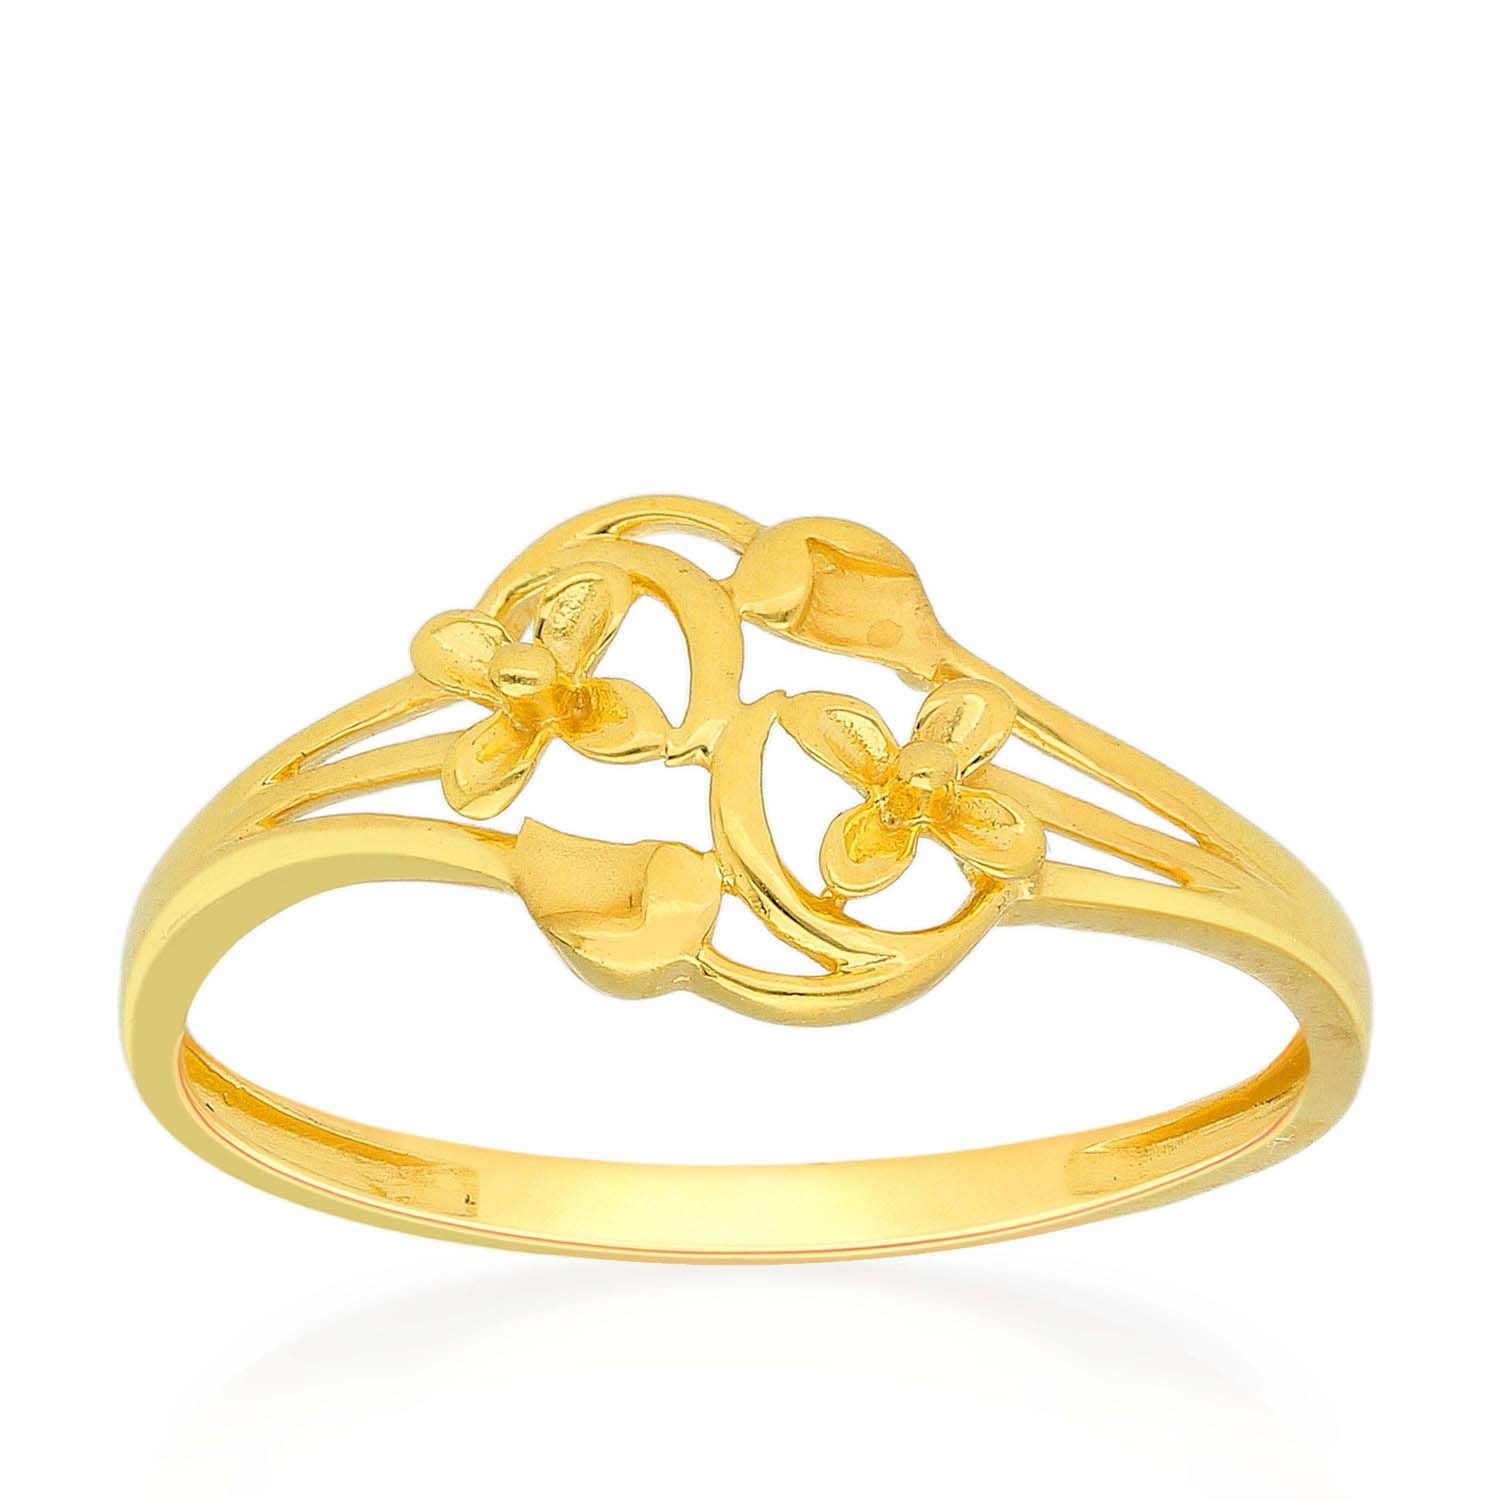 Malabar 22 KT Gold Studded Casual Ring FRGEDZRURGW701